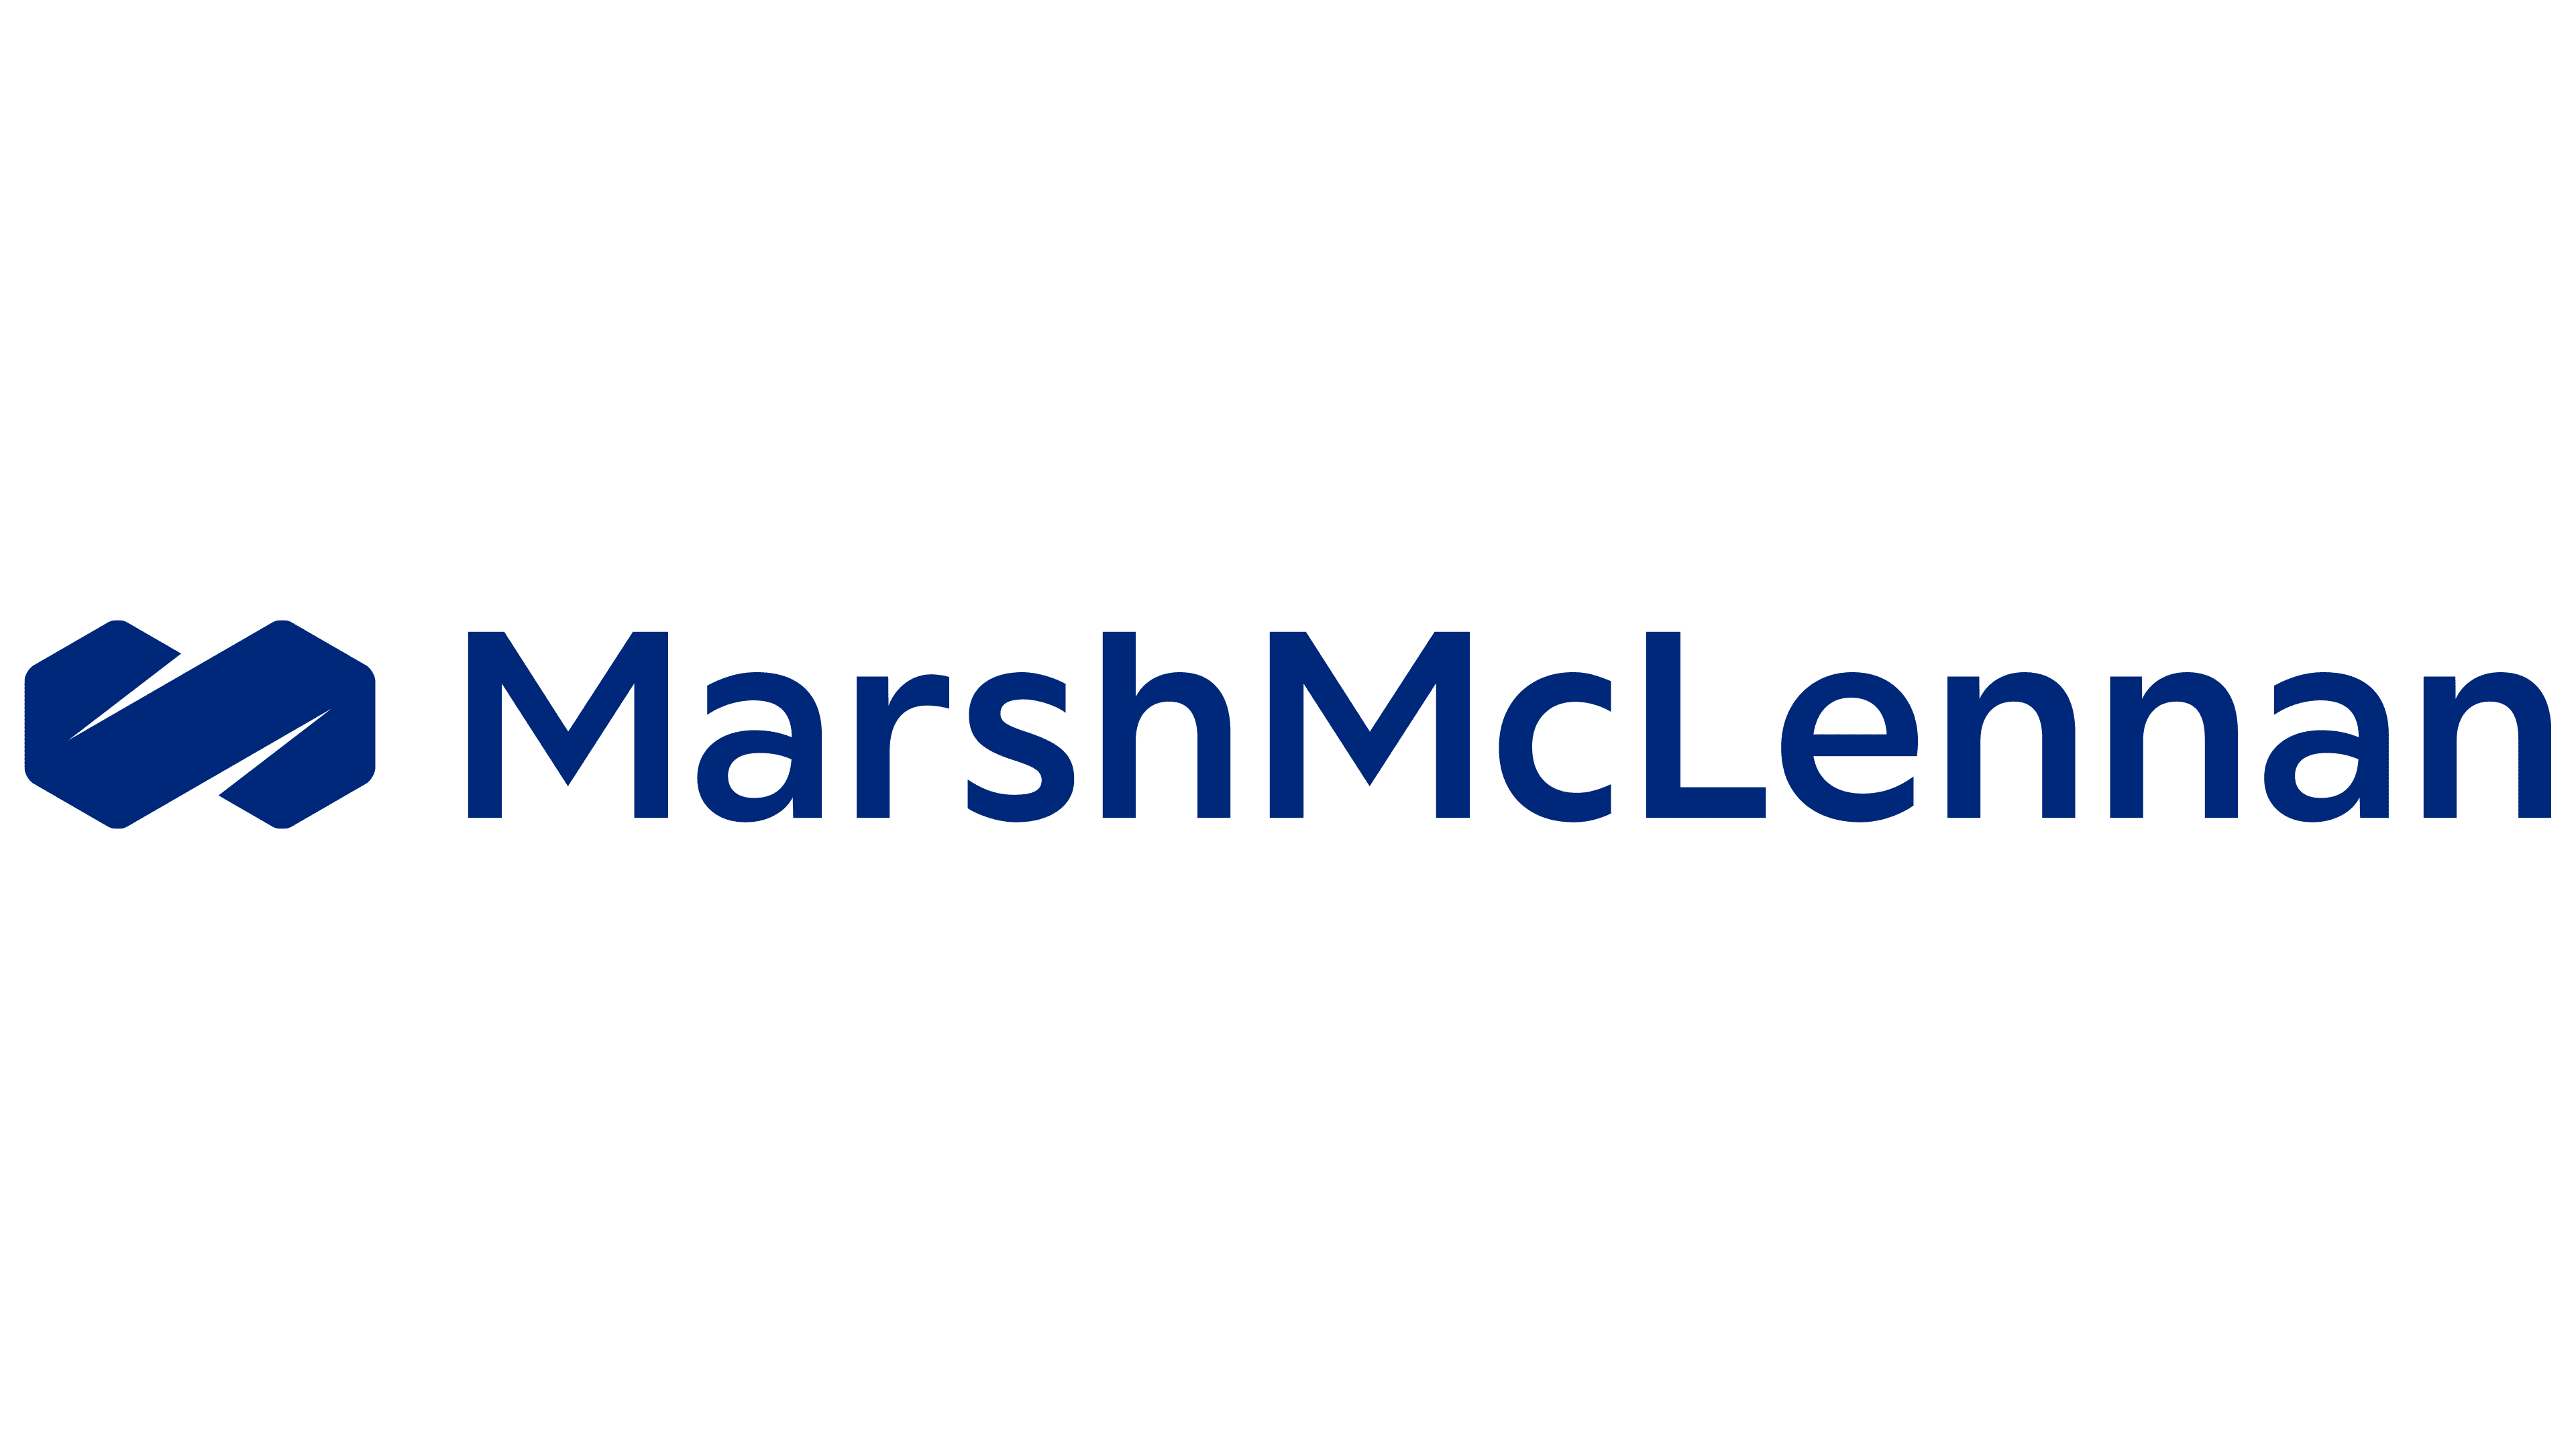 Marsh McLennan Rebranded